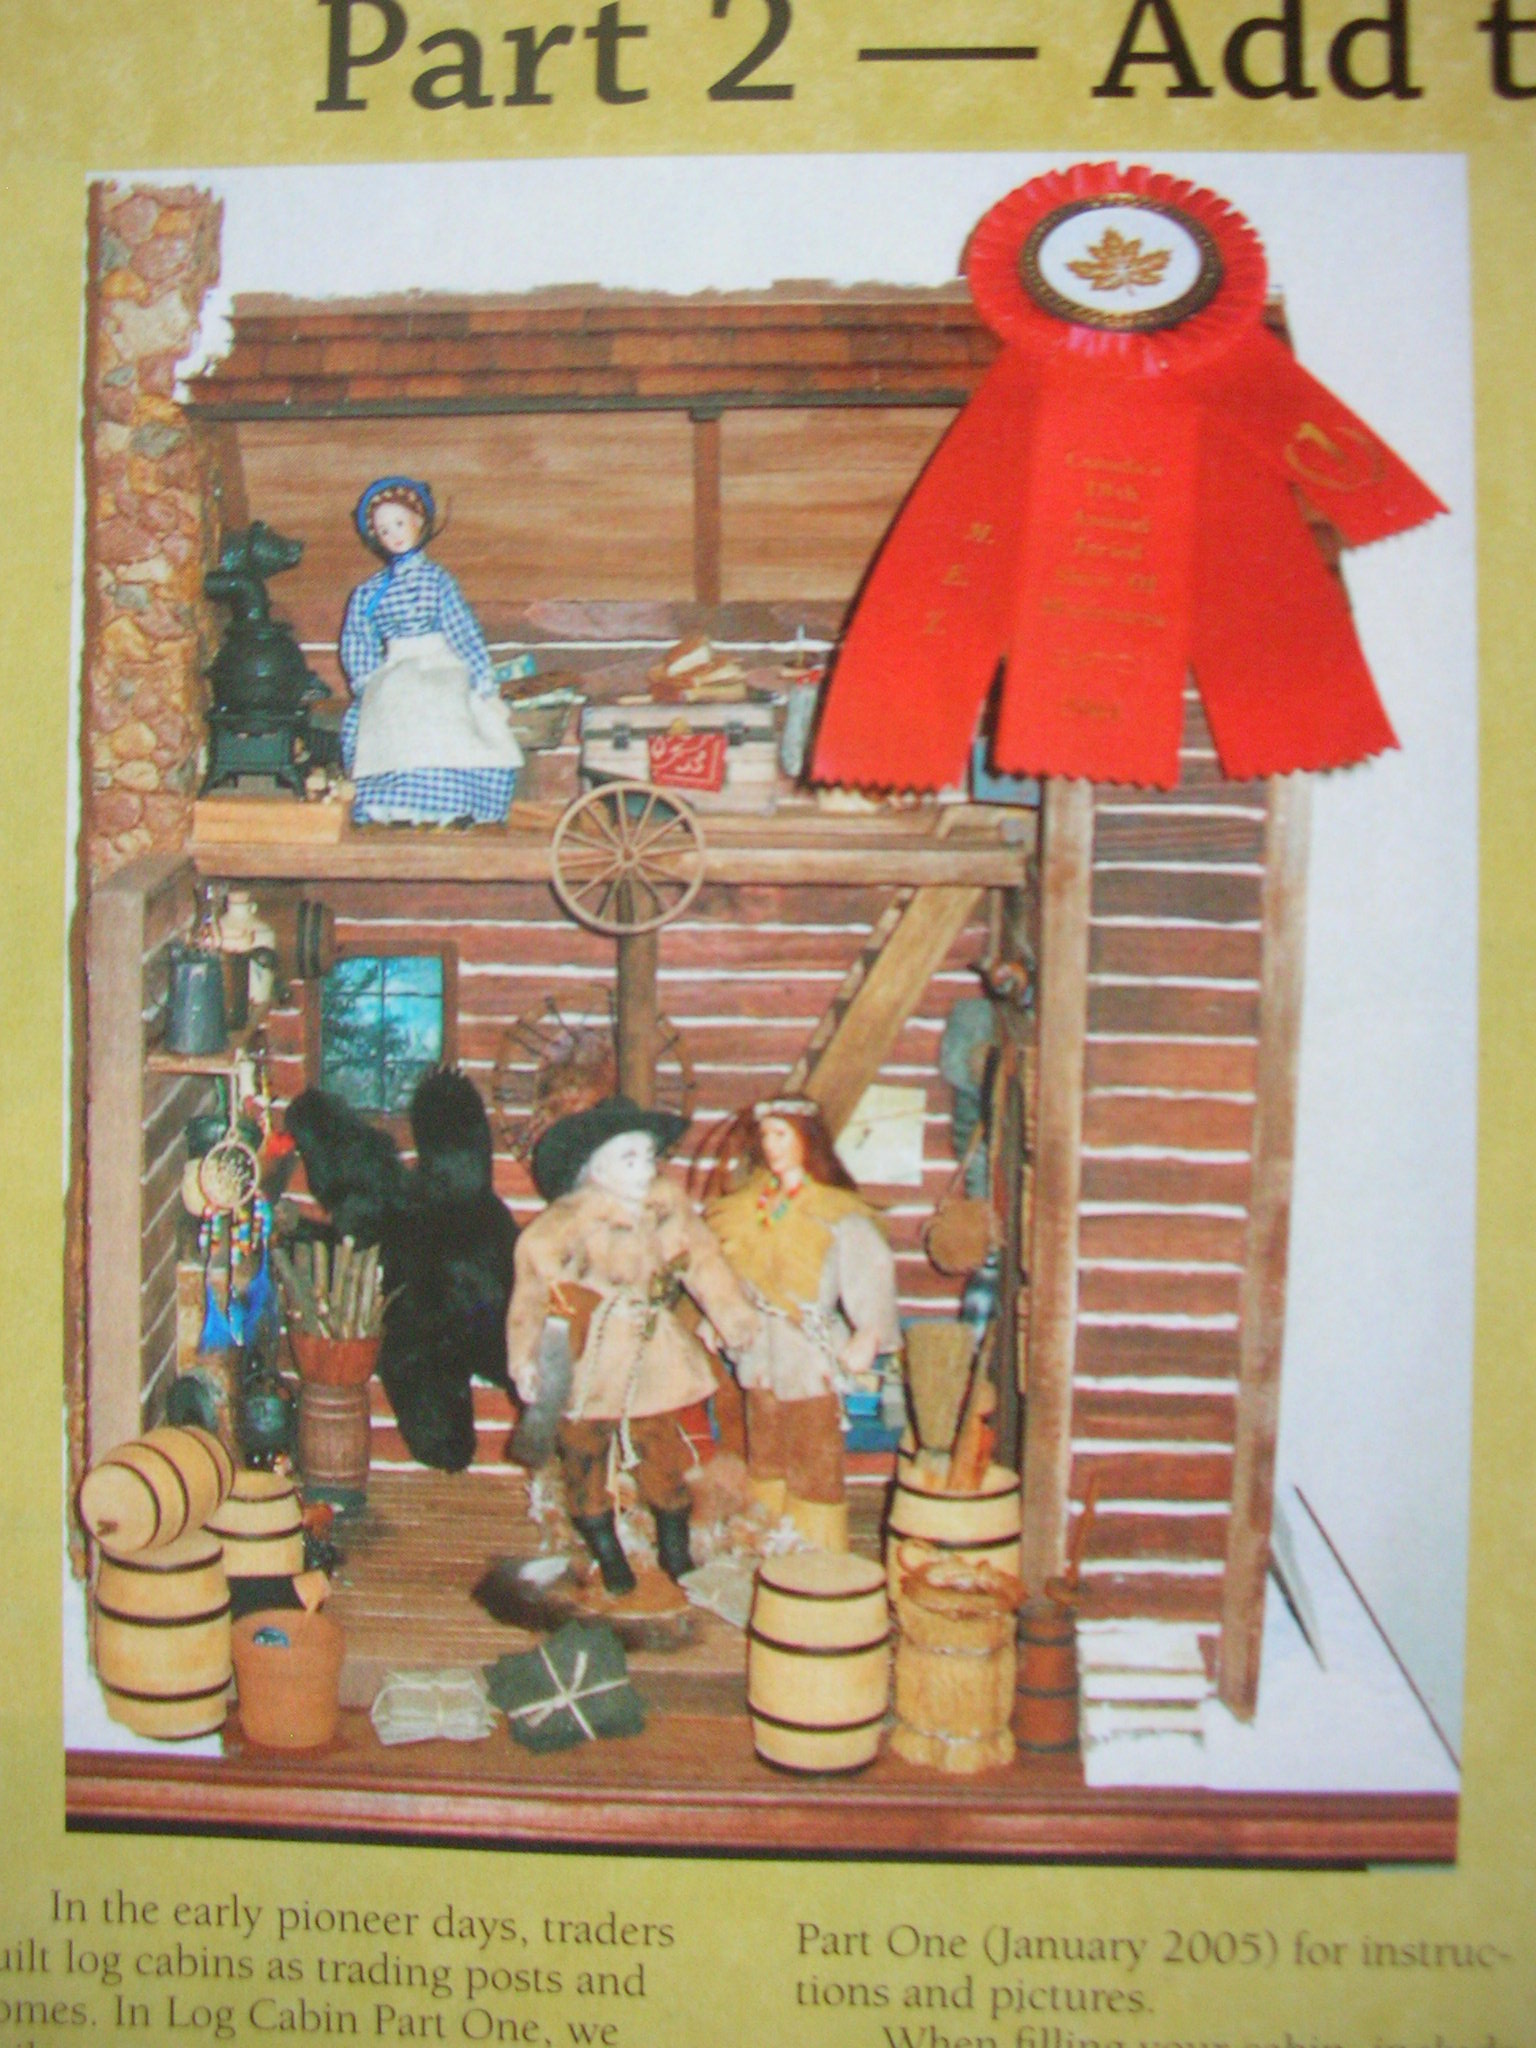 pioneer real wood log cabin dollhouse